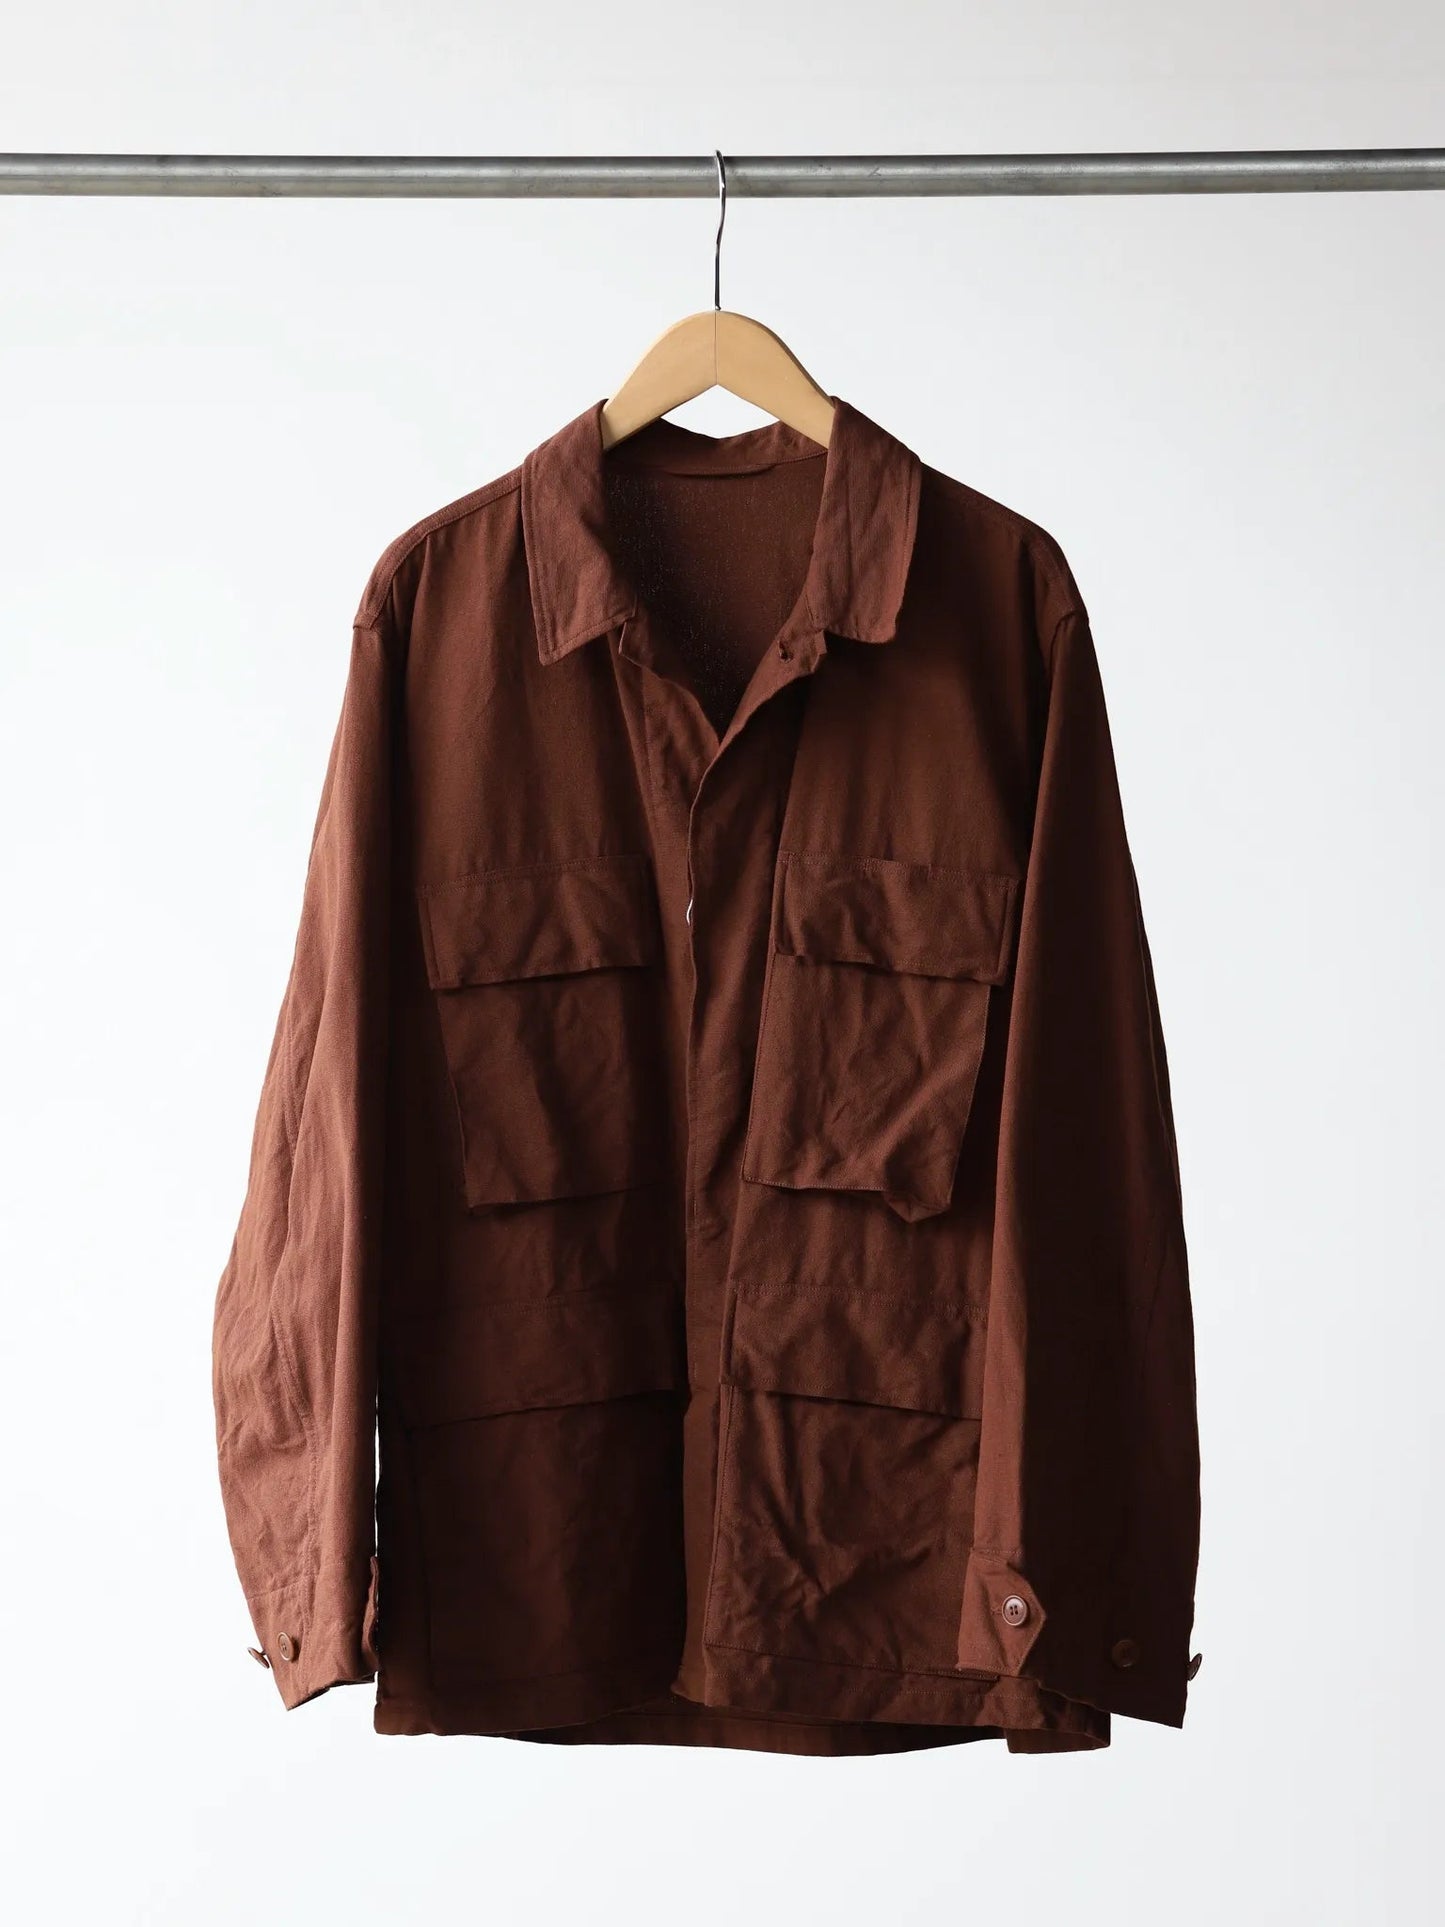 comoli-brown-bdu-jacket-brown-1